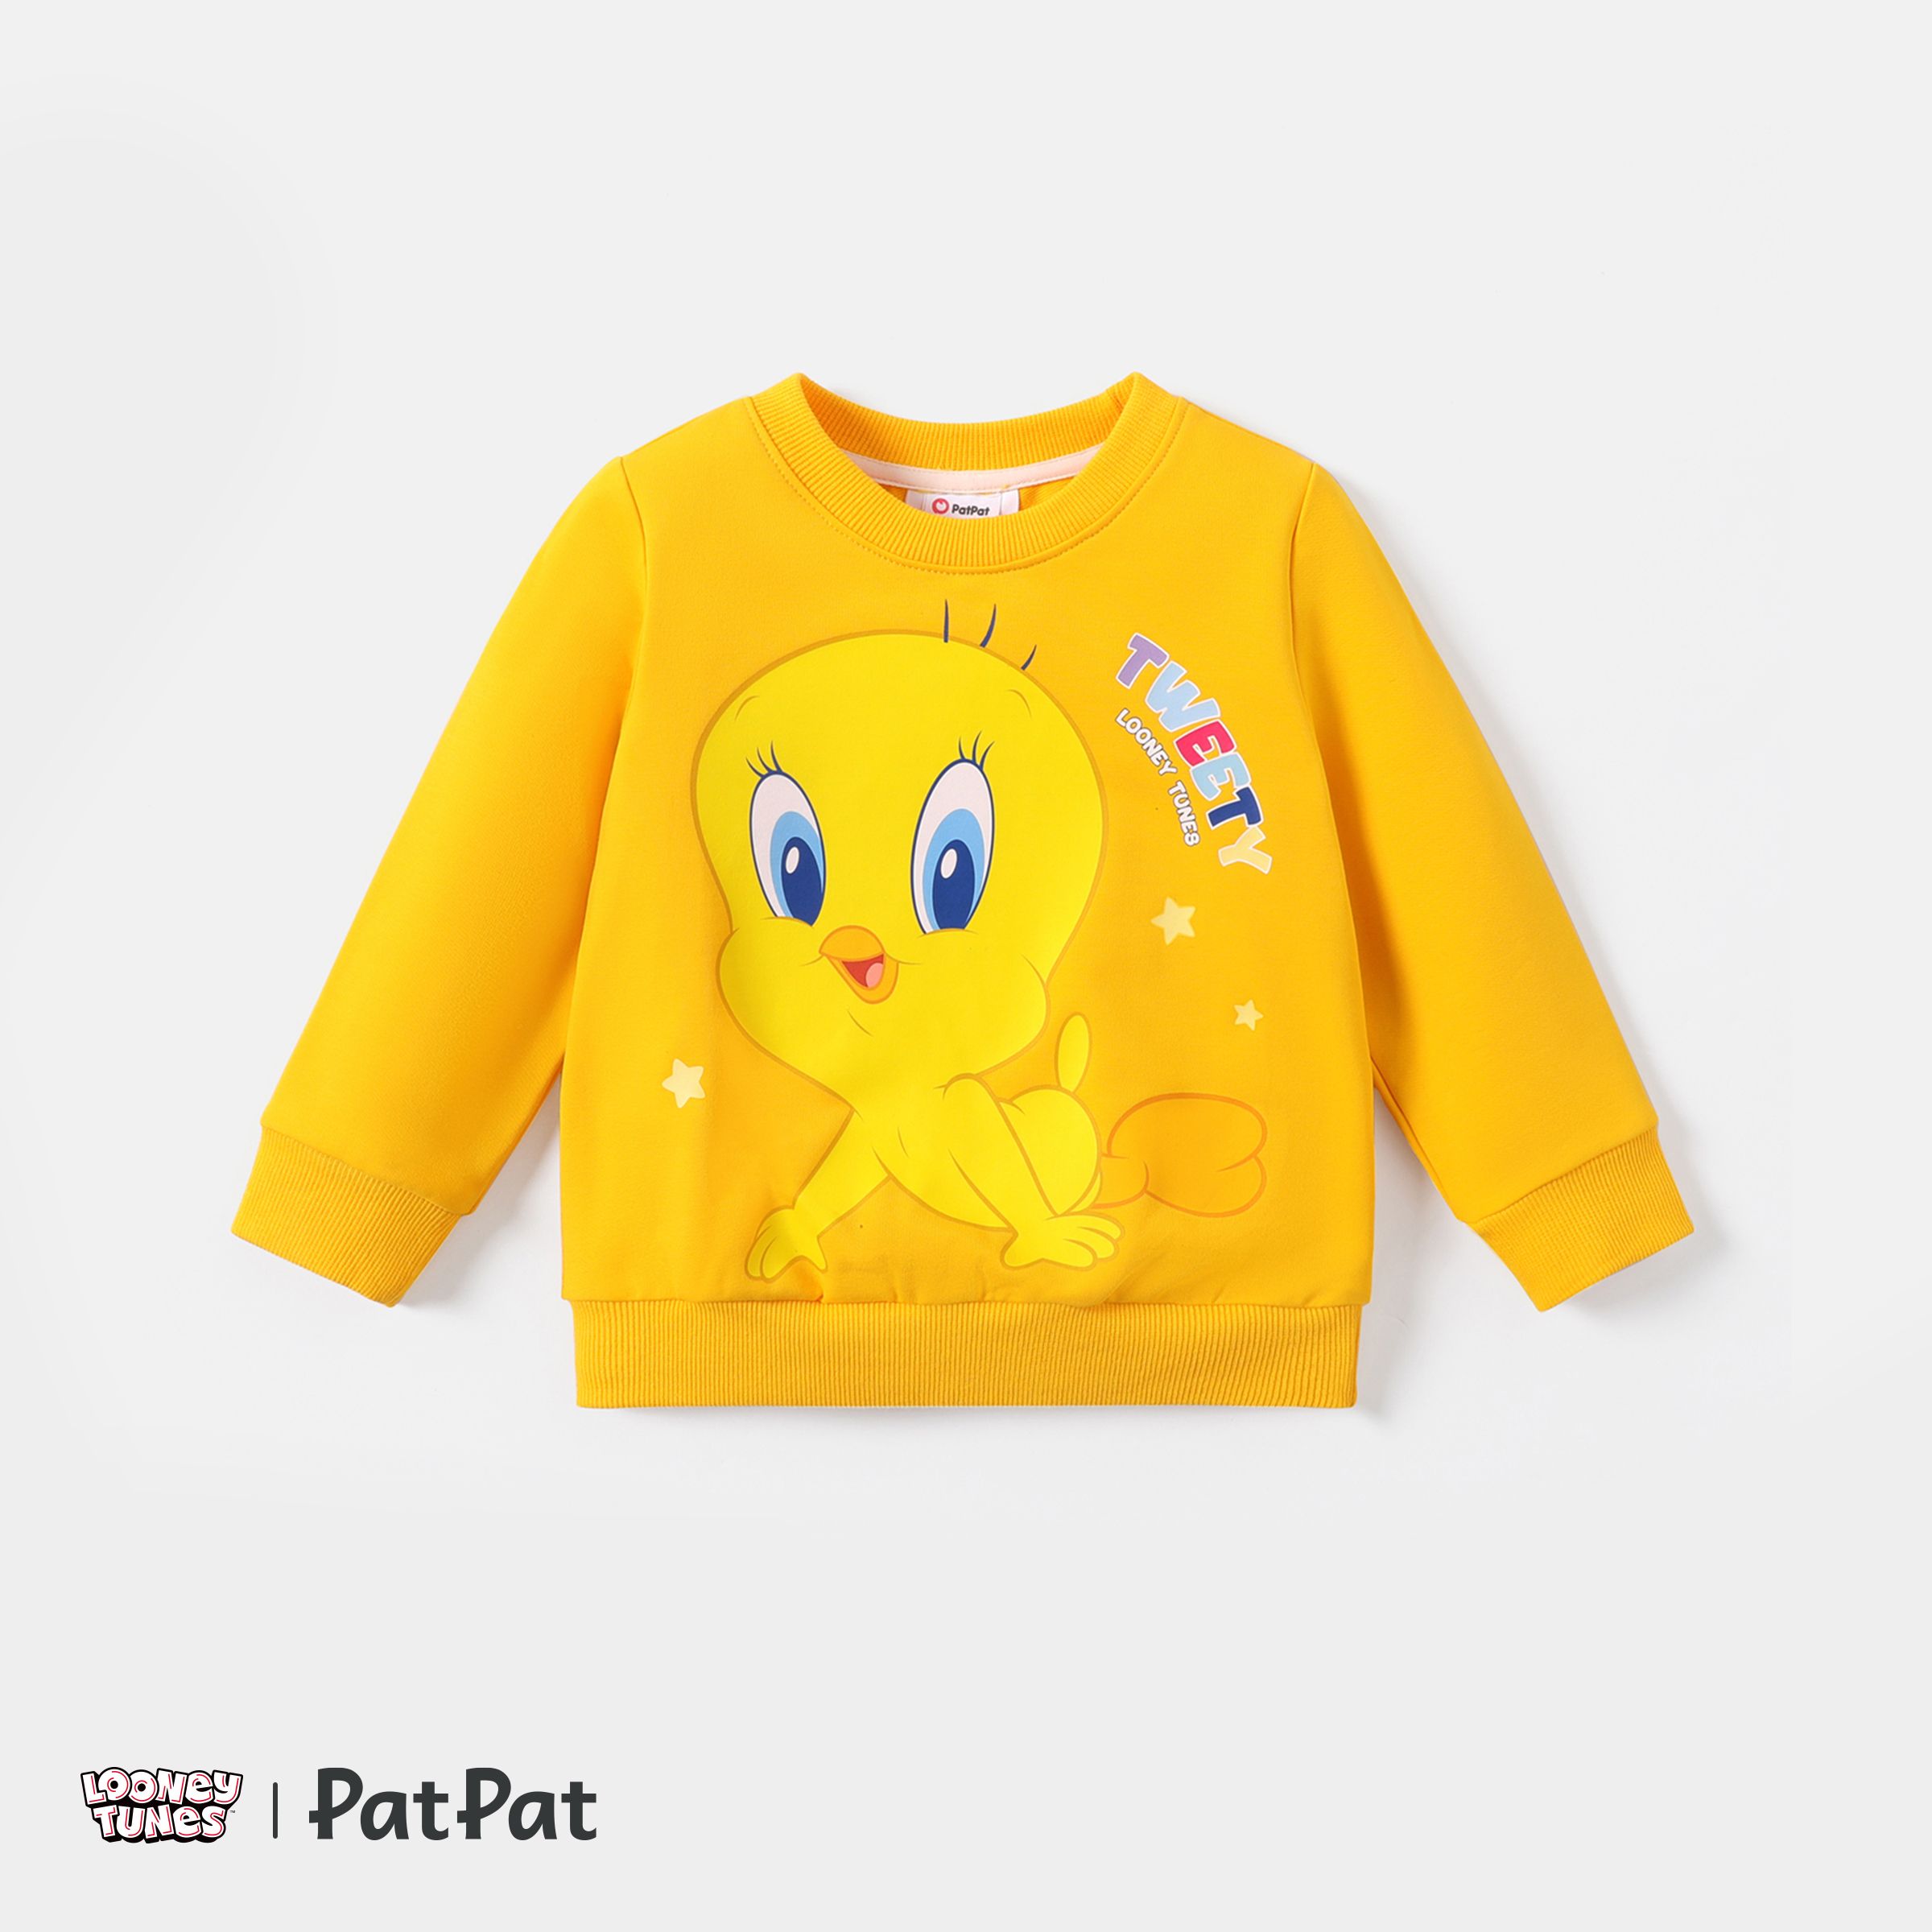 Looney Tunes Baby Boy/Girl Cartoon Animal Print Cotton Long-sleeve Sweatshirt